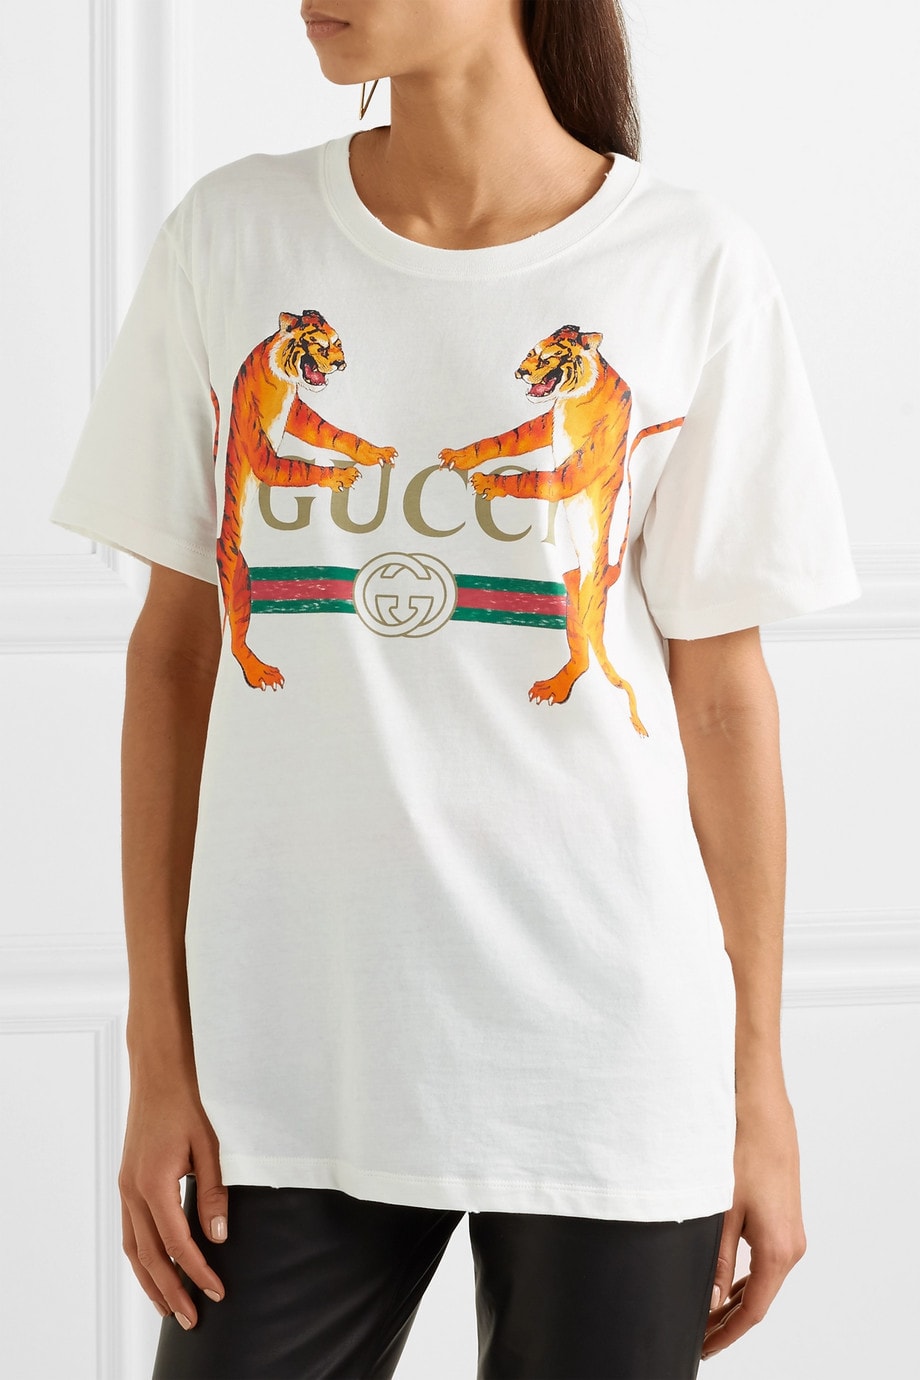 Gucci Logo T-Shirt Roaring Tiger Animal Print Bold Iconic Classic